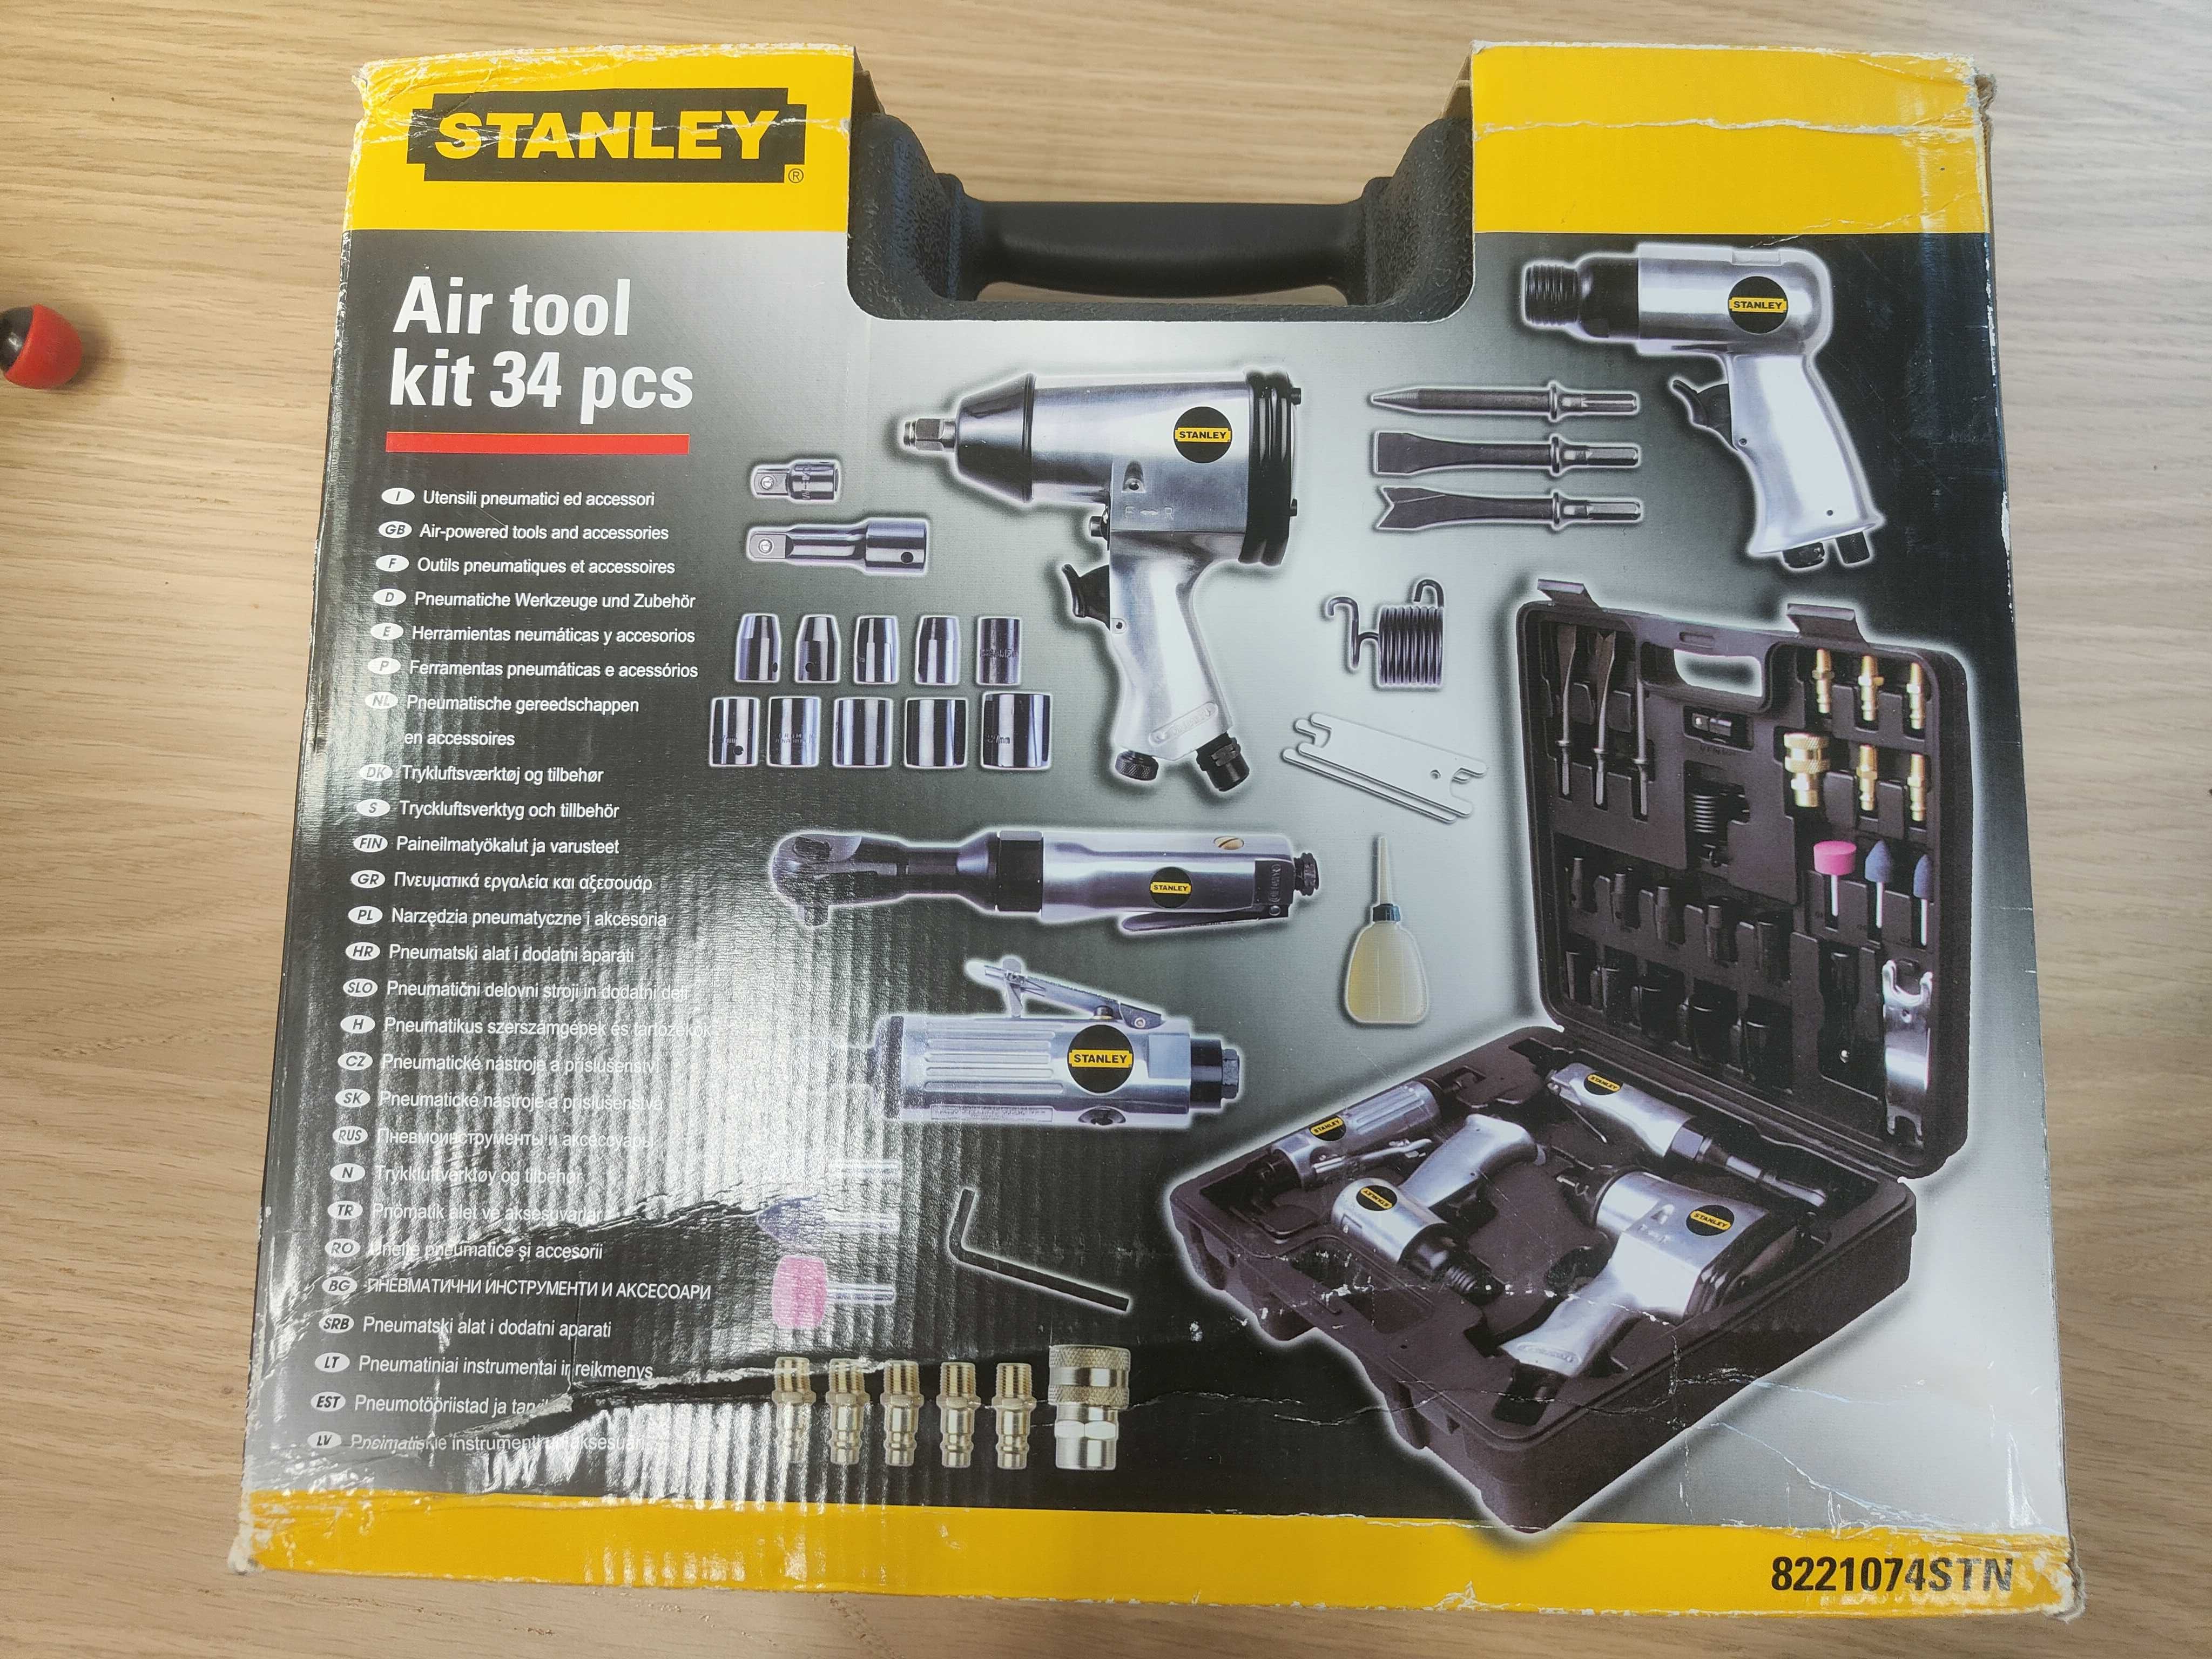 Zestaw narzędzi Stanley Air tool kit 34 pcs